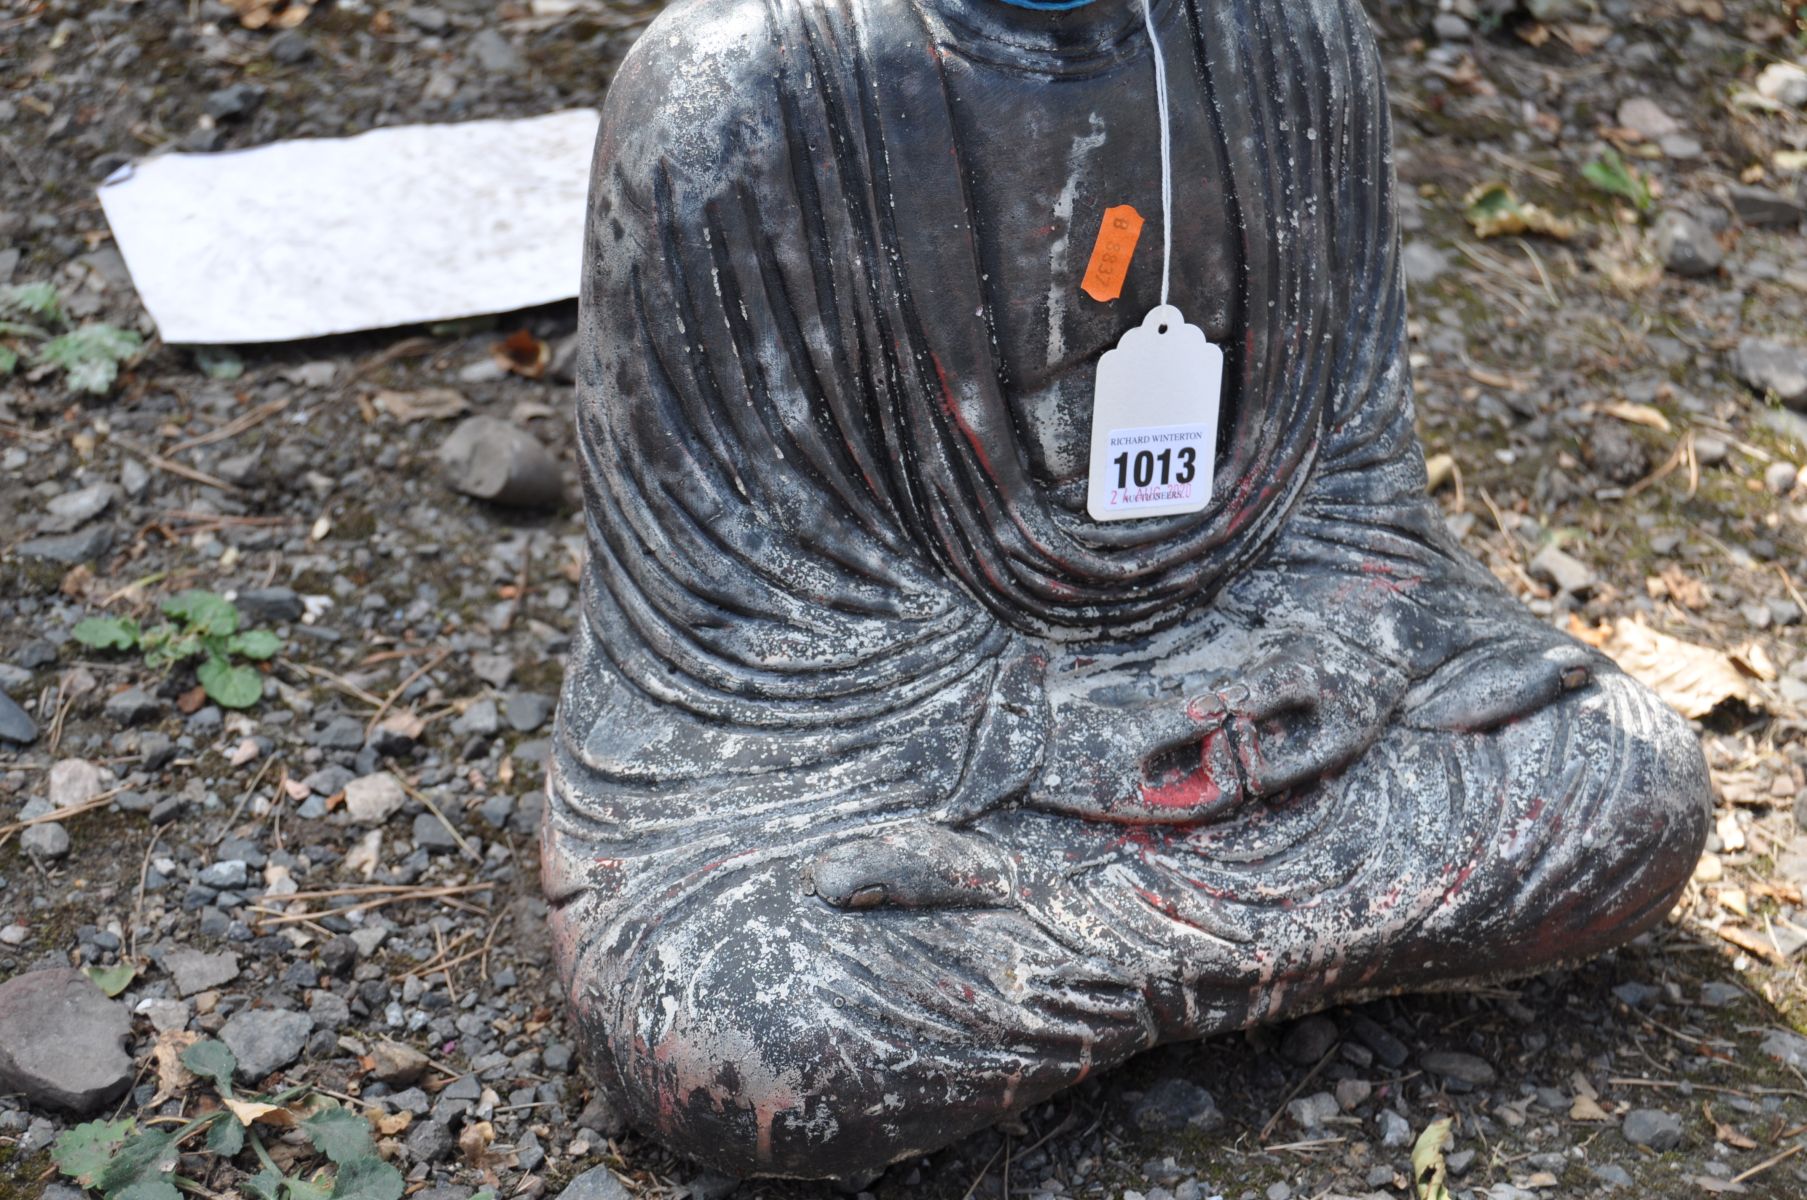 A MODERN COMPOSITE GARDEN BUDDHA FIGURE, 45cm high - Image 3 of 3